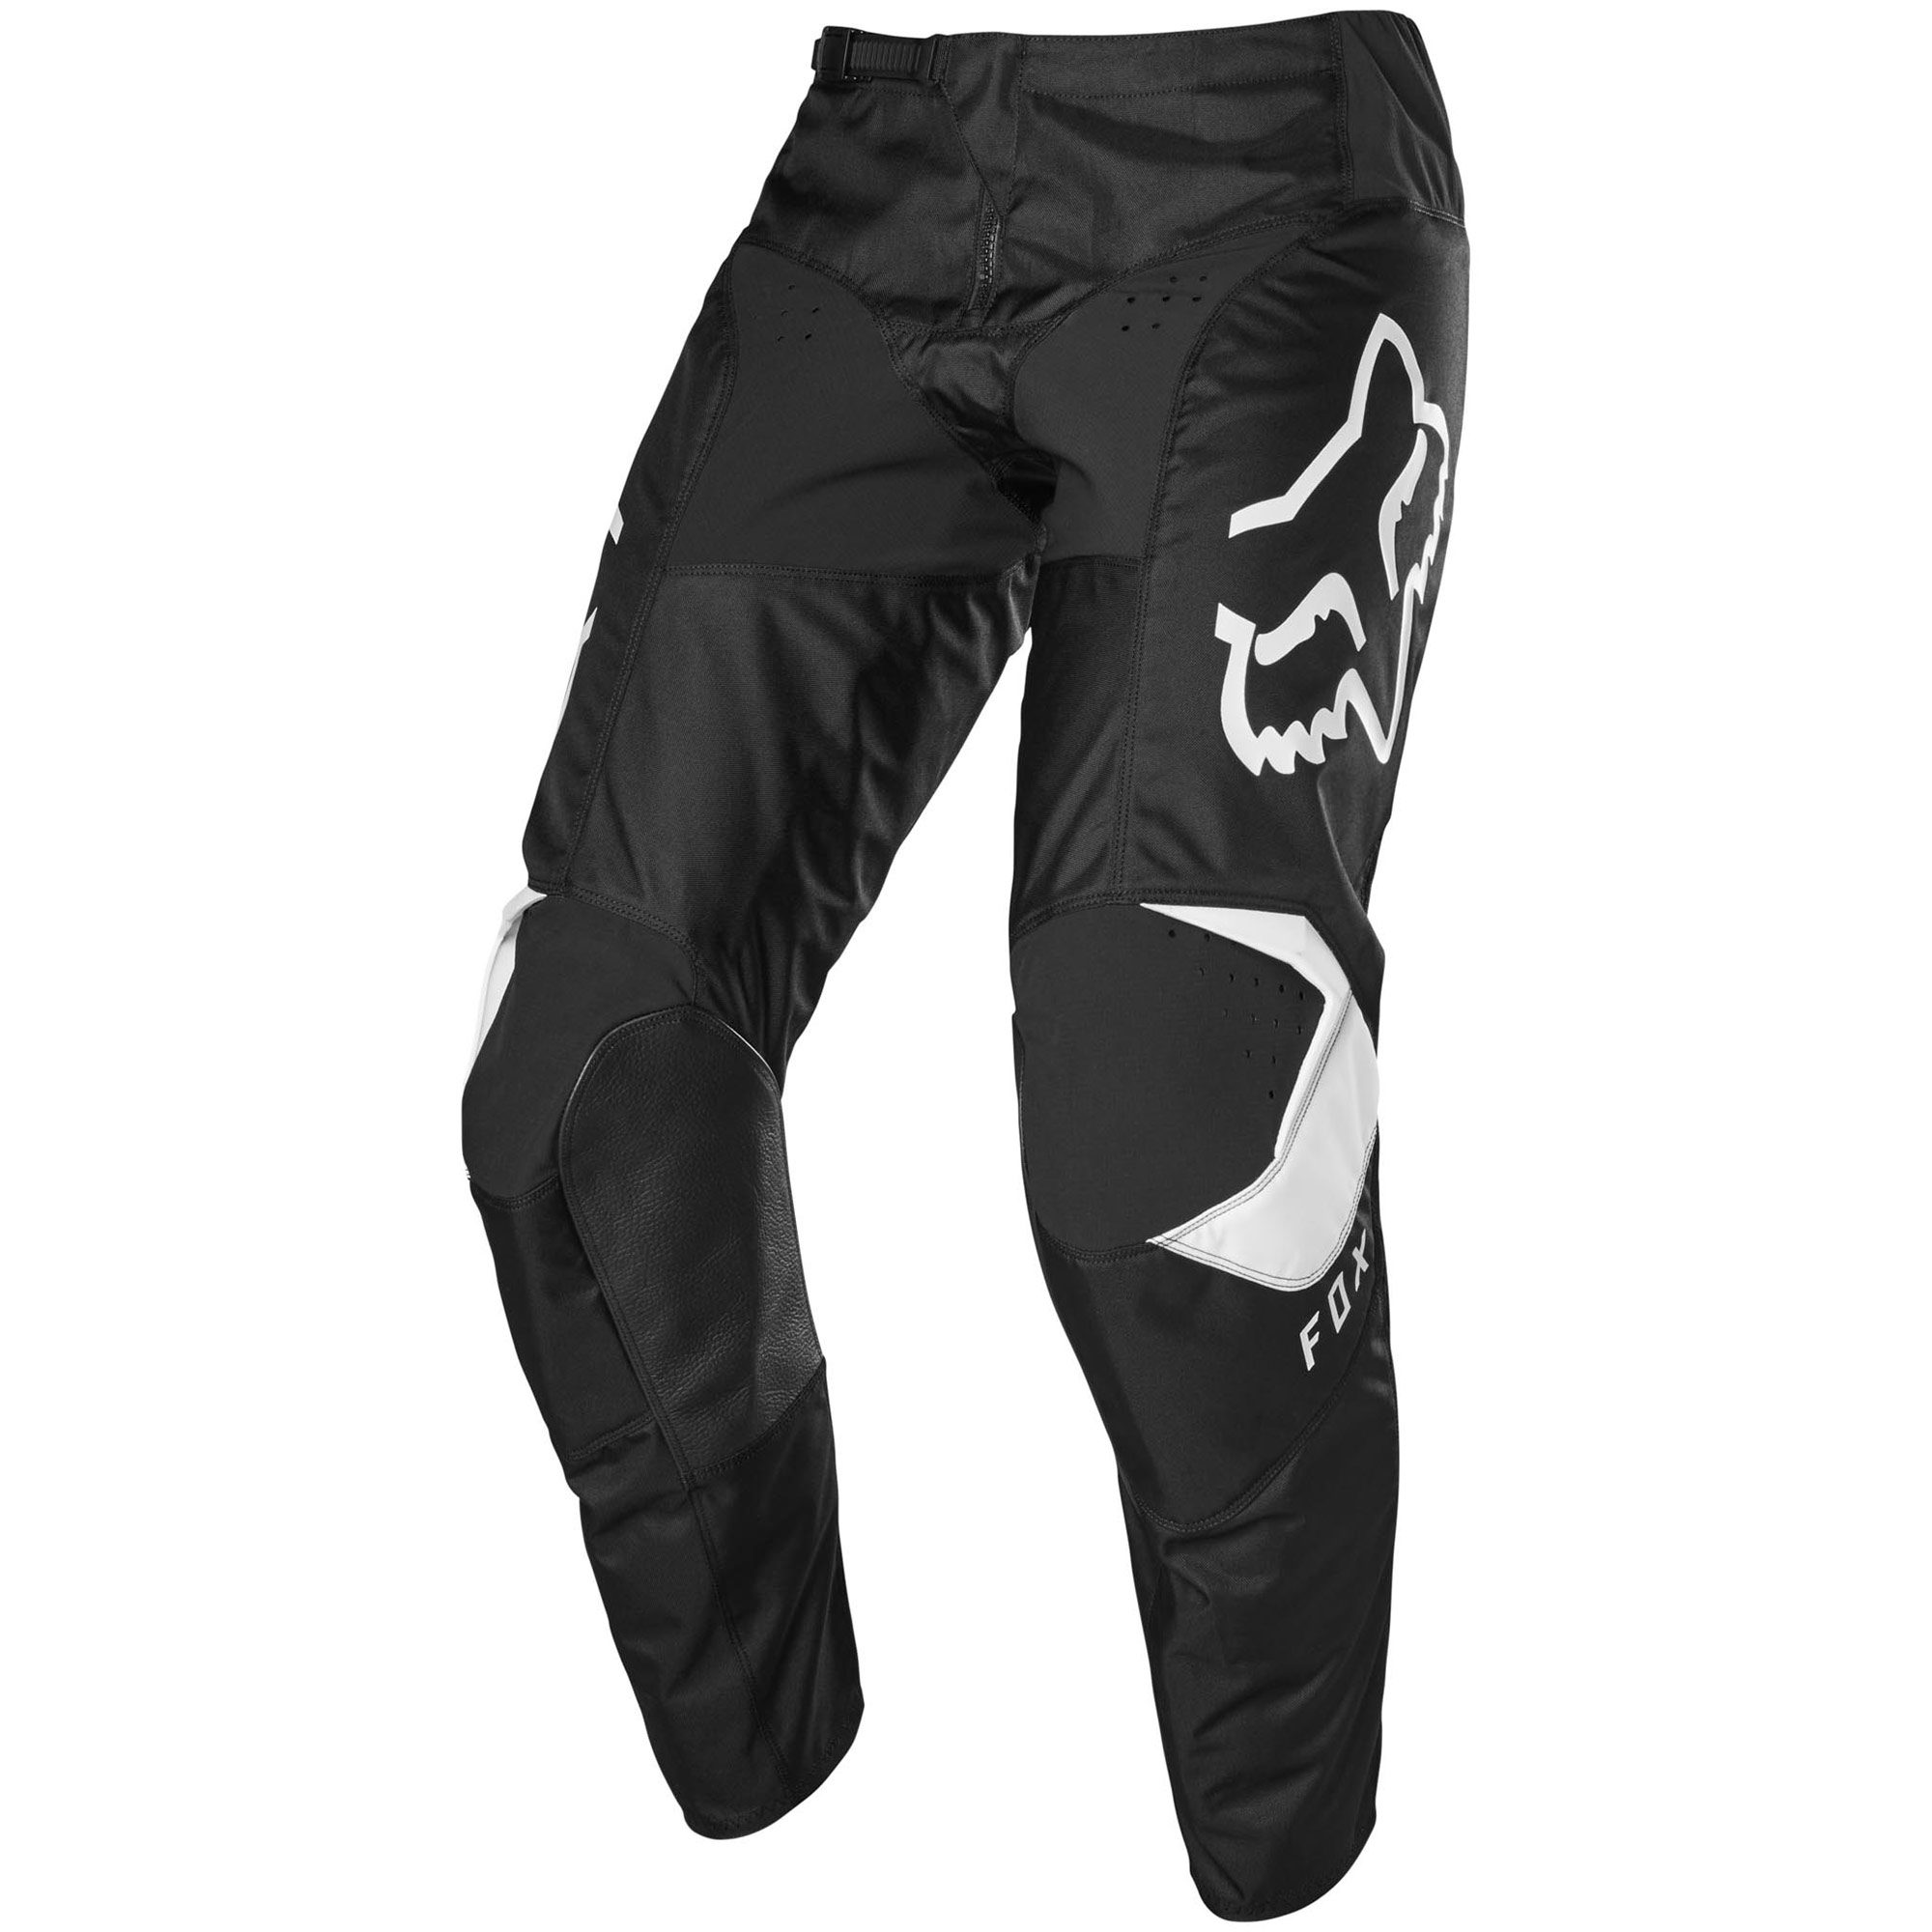 Fox Clothing 180 Prix Motocross MX Off Road Riding Pants Trousers | eBay